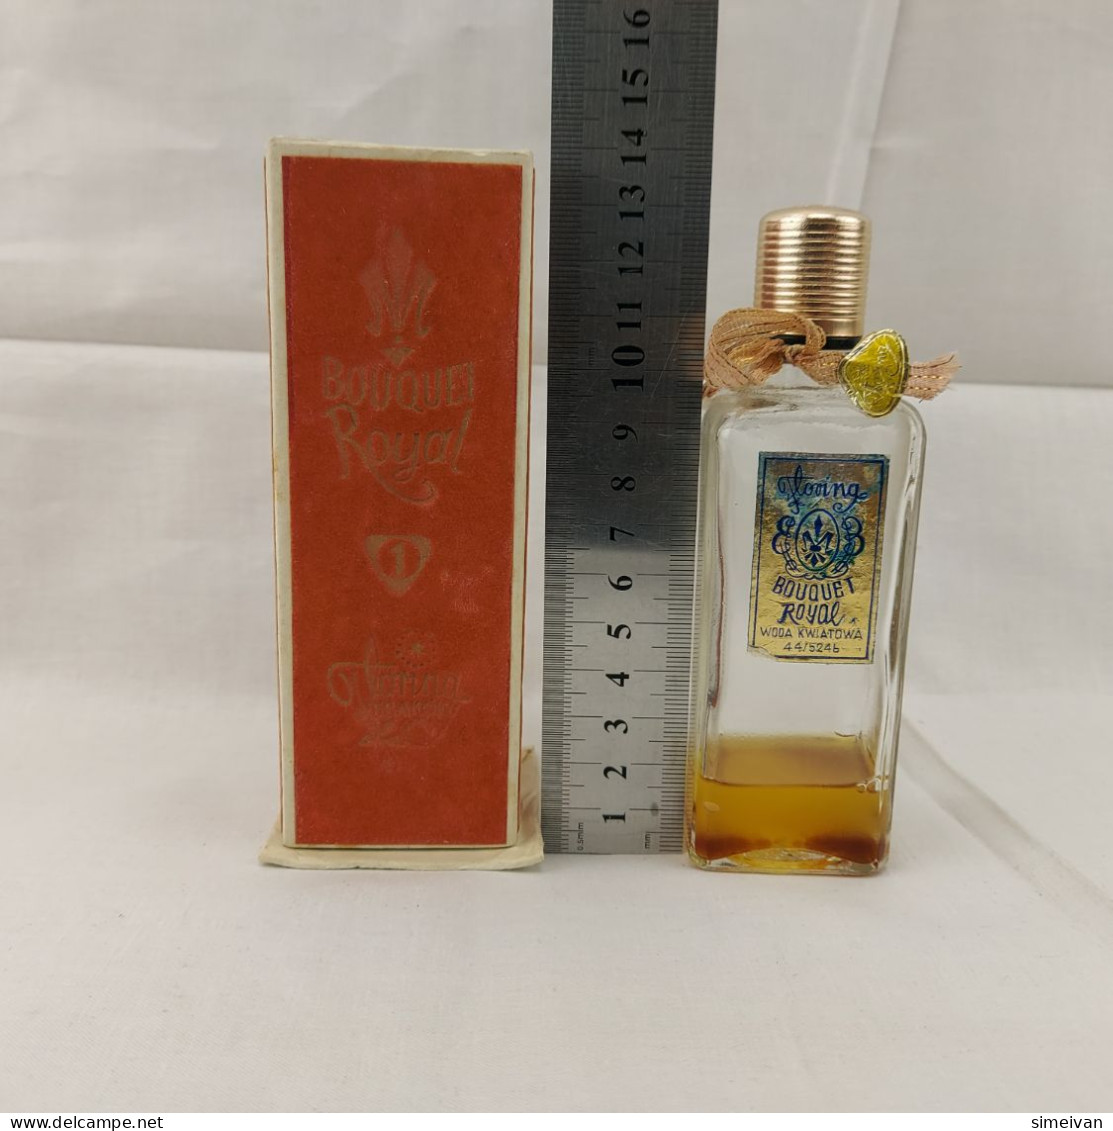 Vintage Glass Perfume Bottle Bouquet Royal Florina Krakow in a Box 100ml #1301